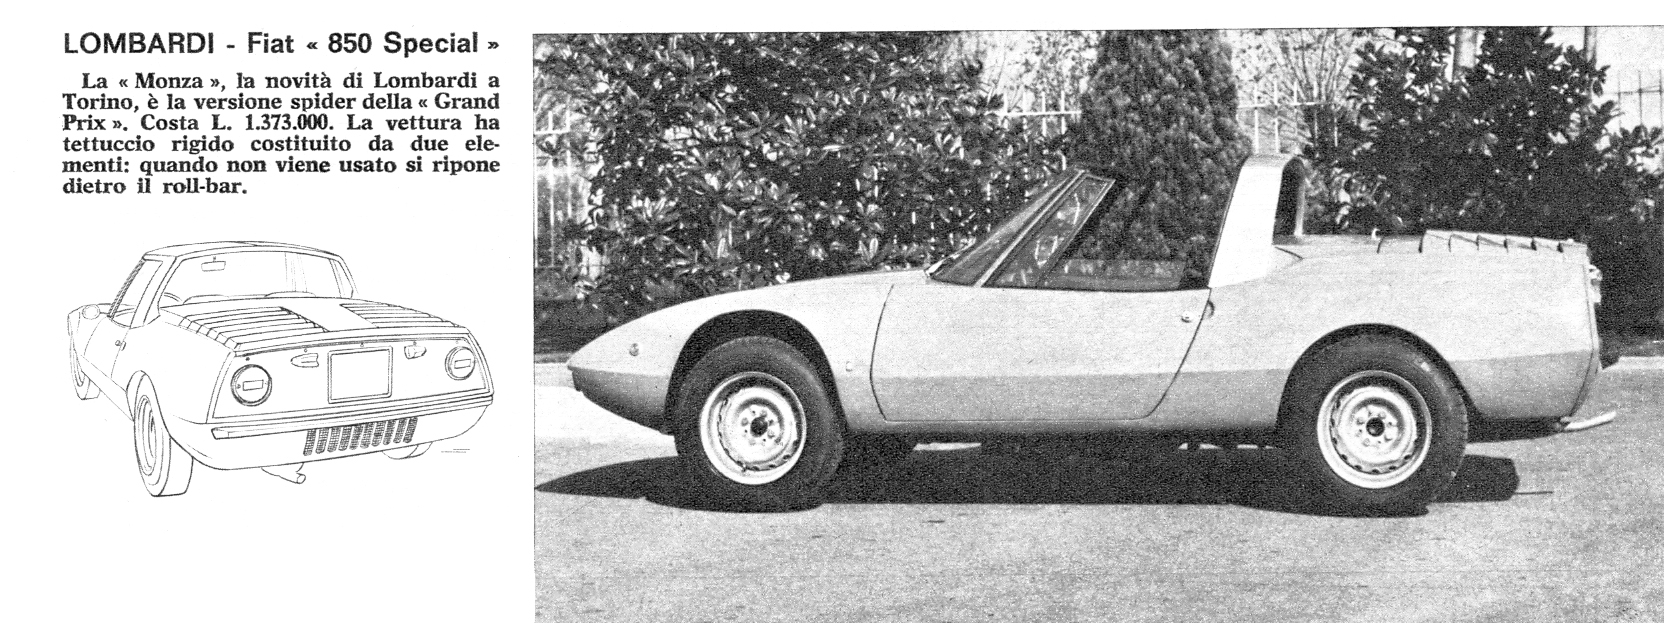 Fiat 850 Monza (Francis Lombardi), 1969